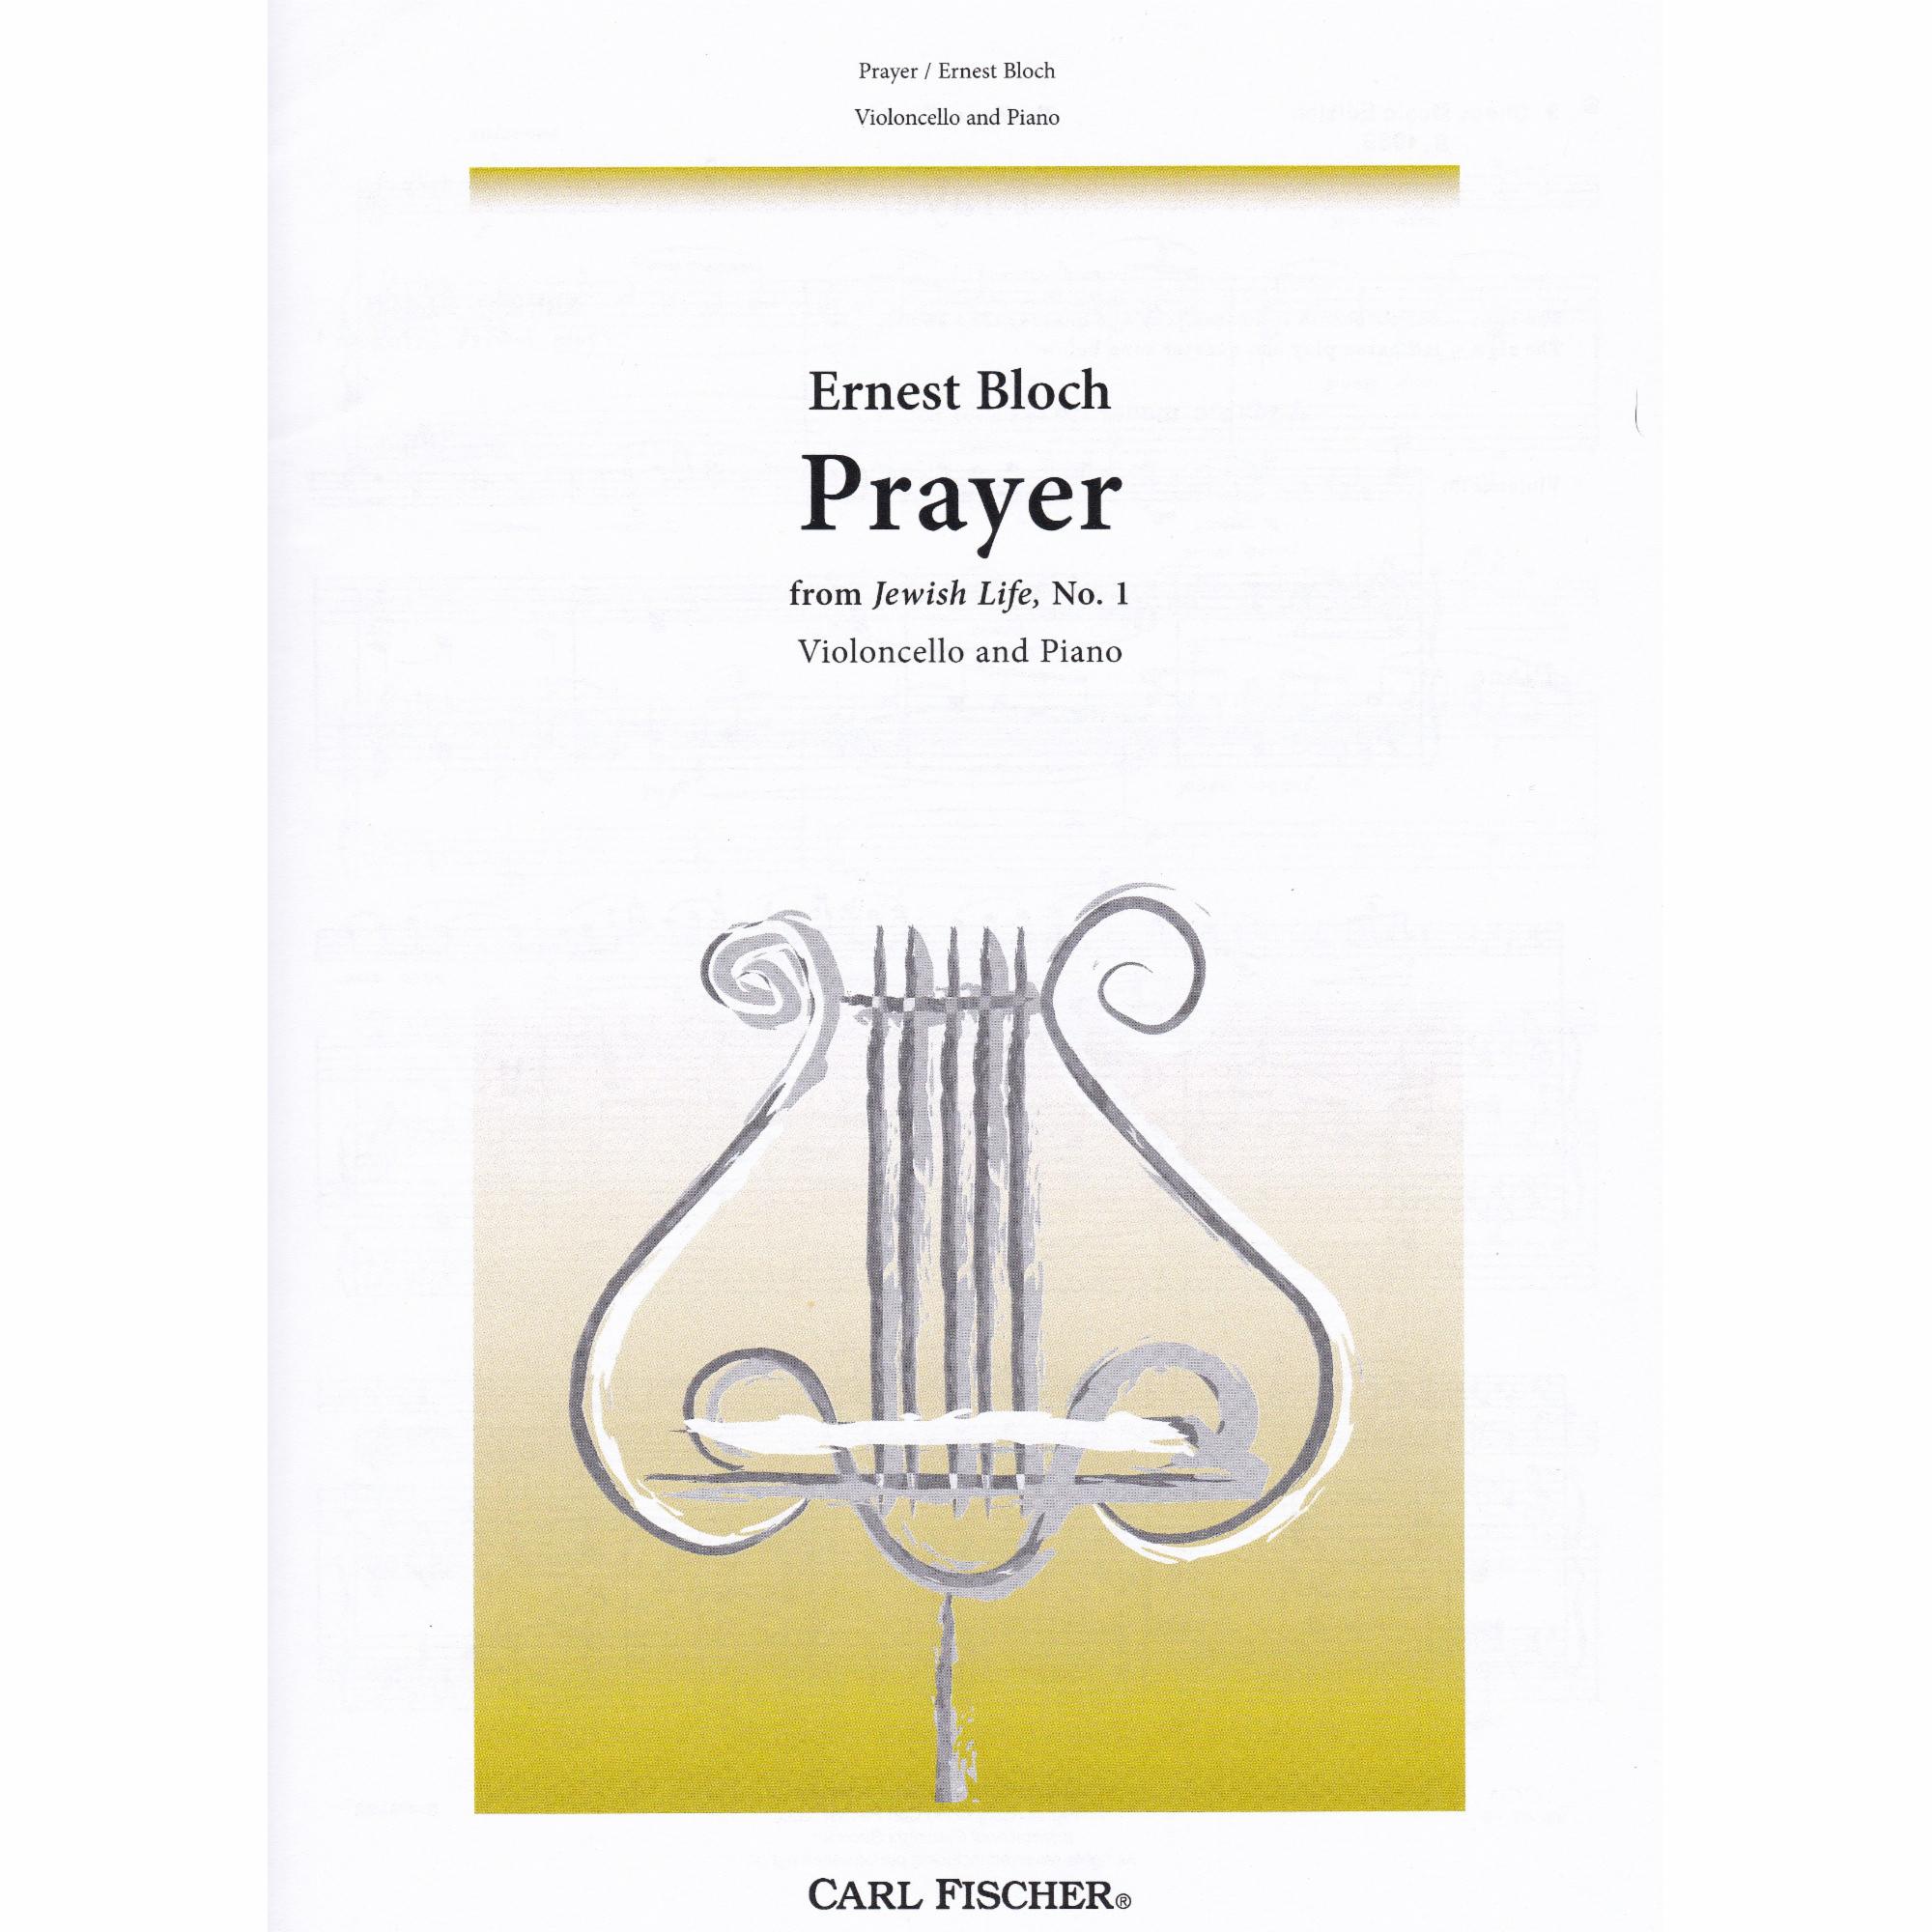 Prayer for Cello and Piano